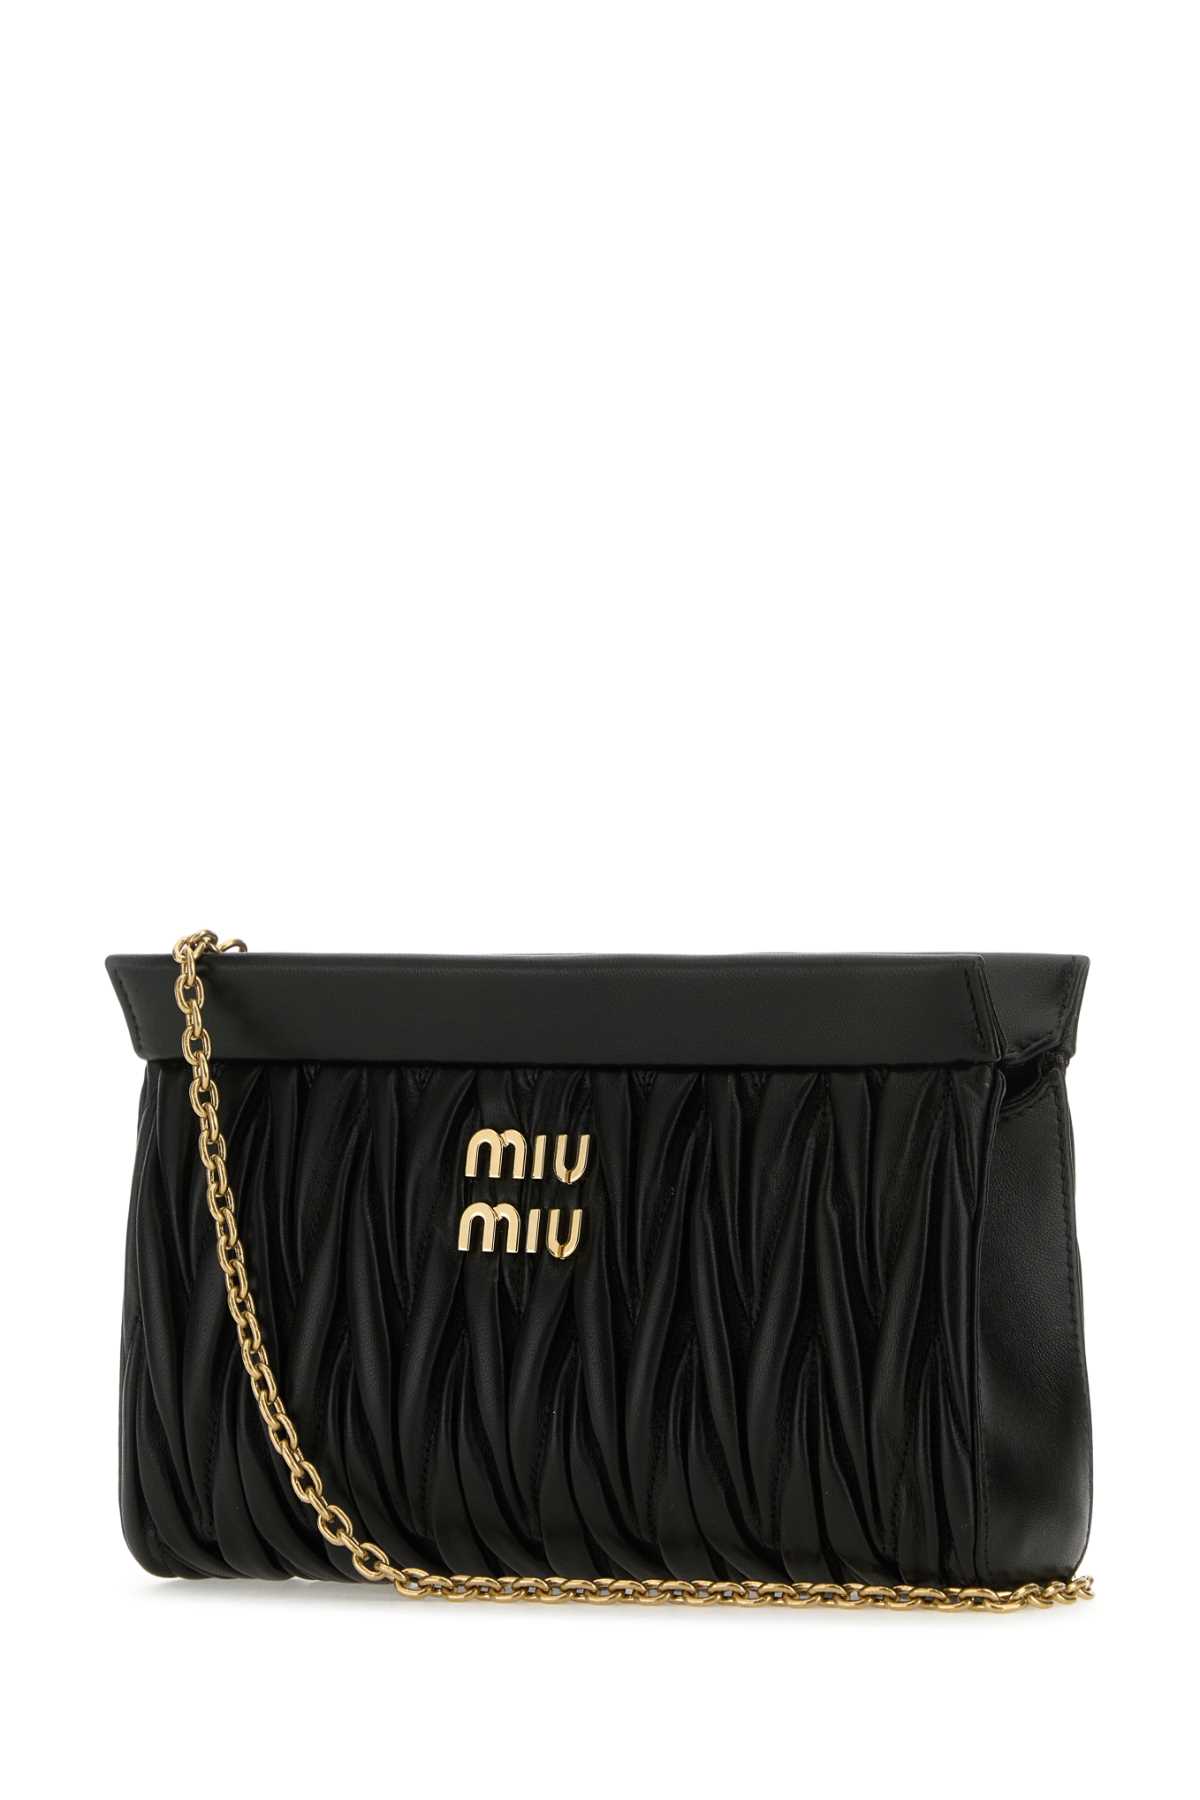 Miu Miu Black Leather Crossbody Bag In F0002